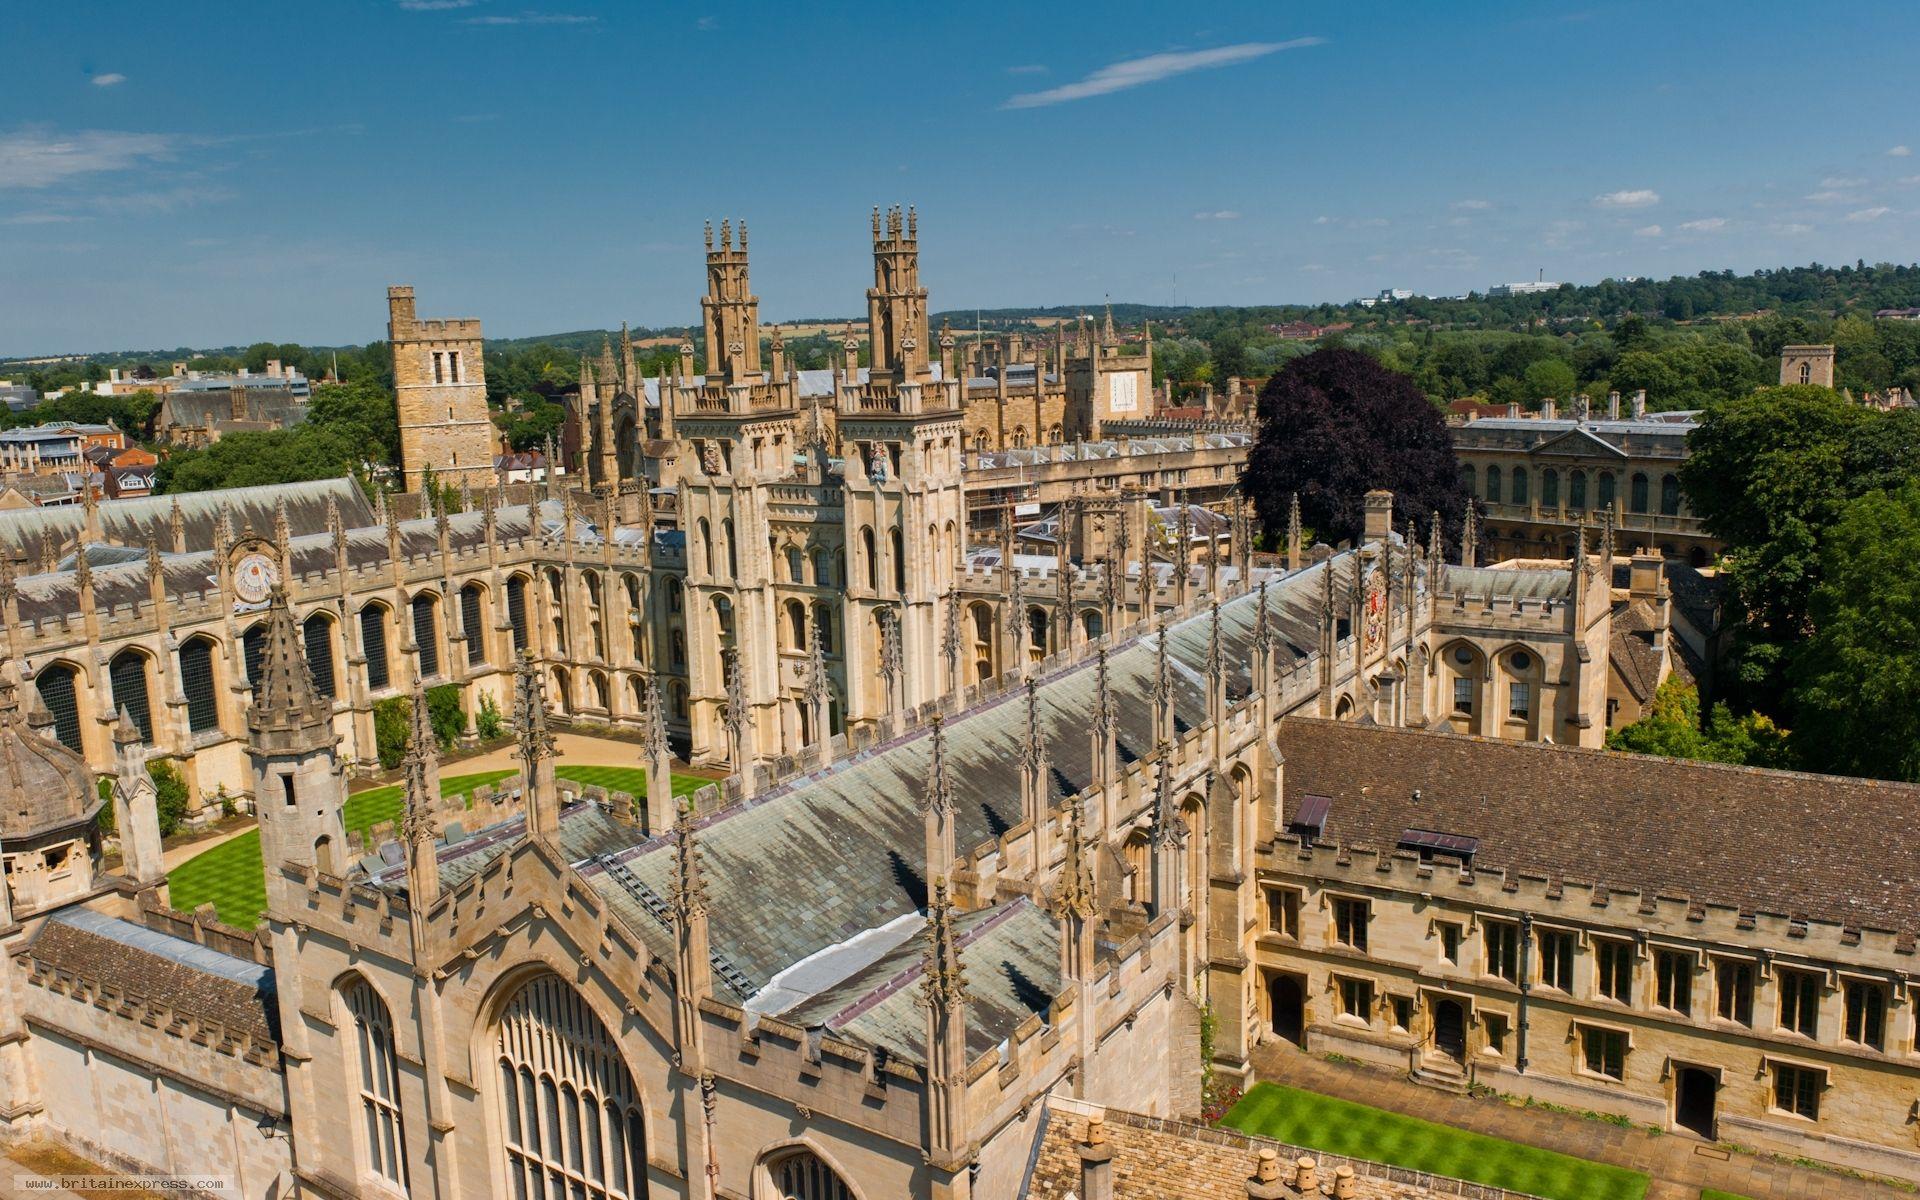 Cambridge university was founded